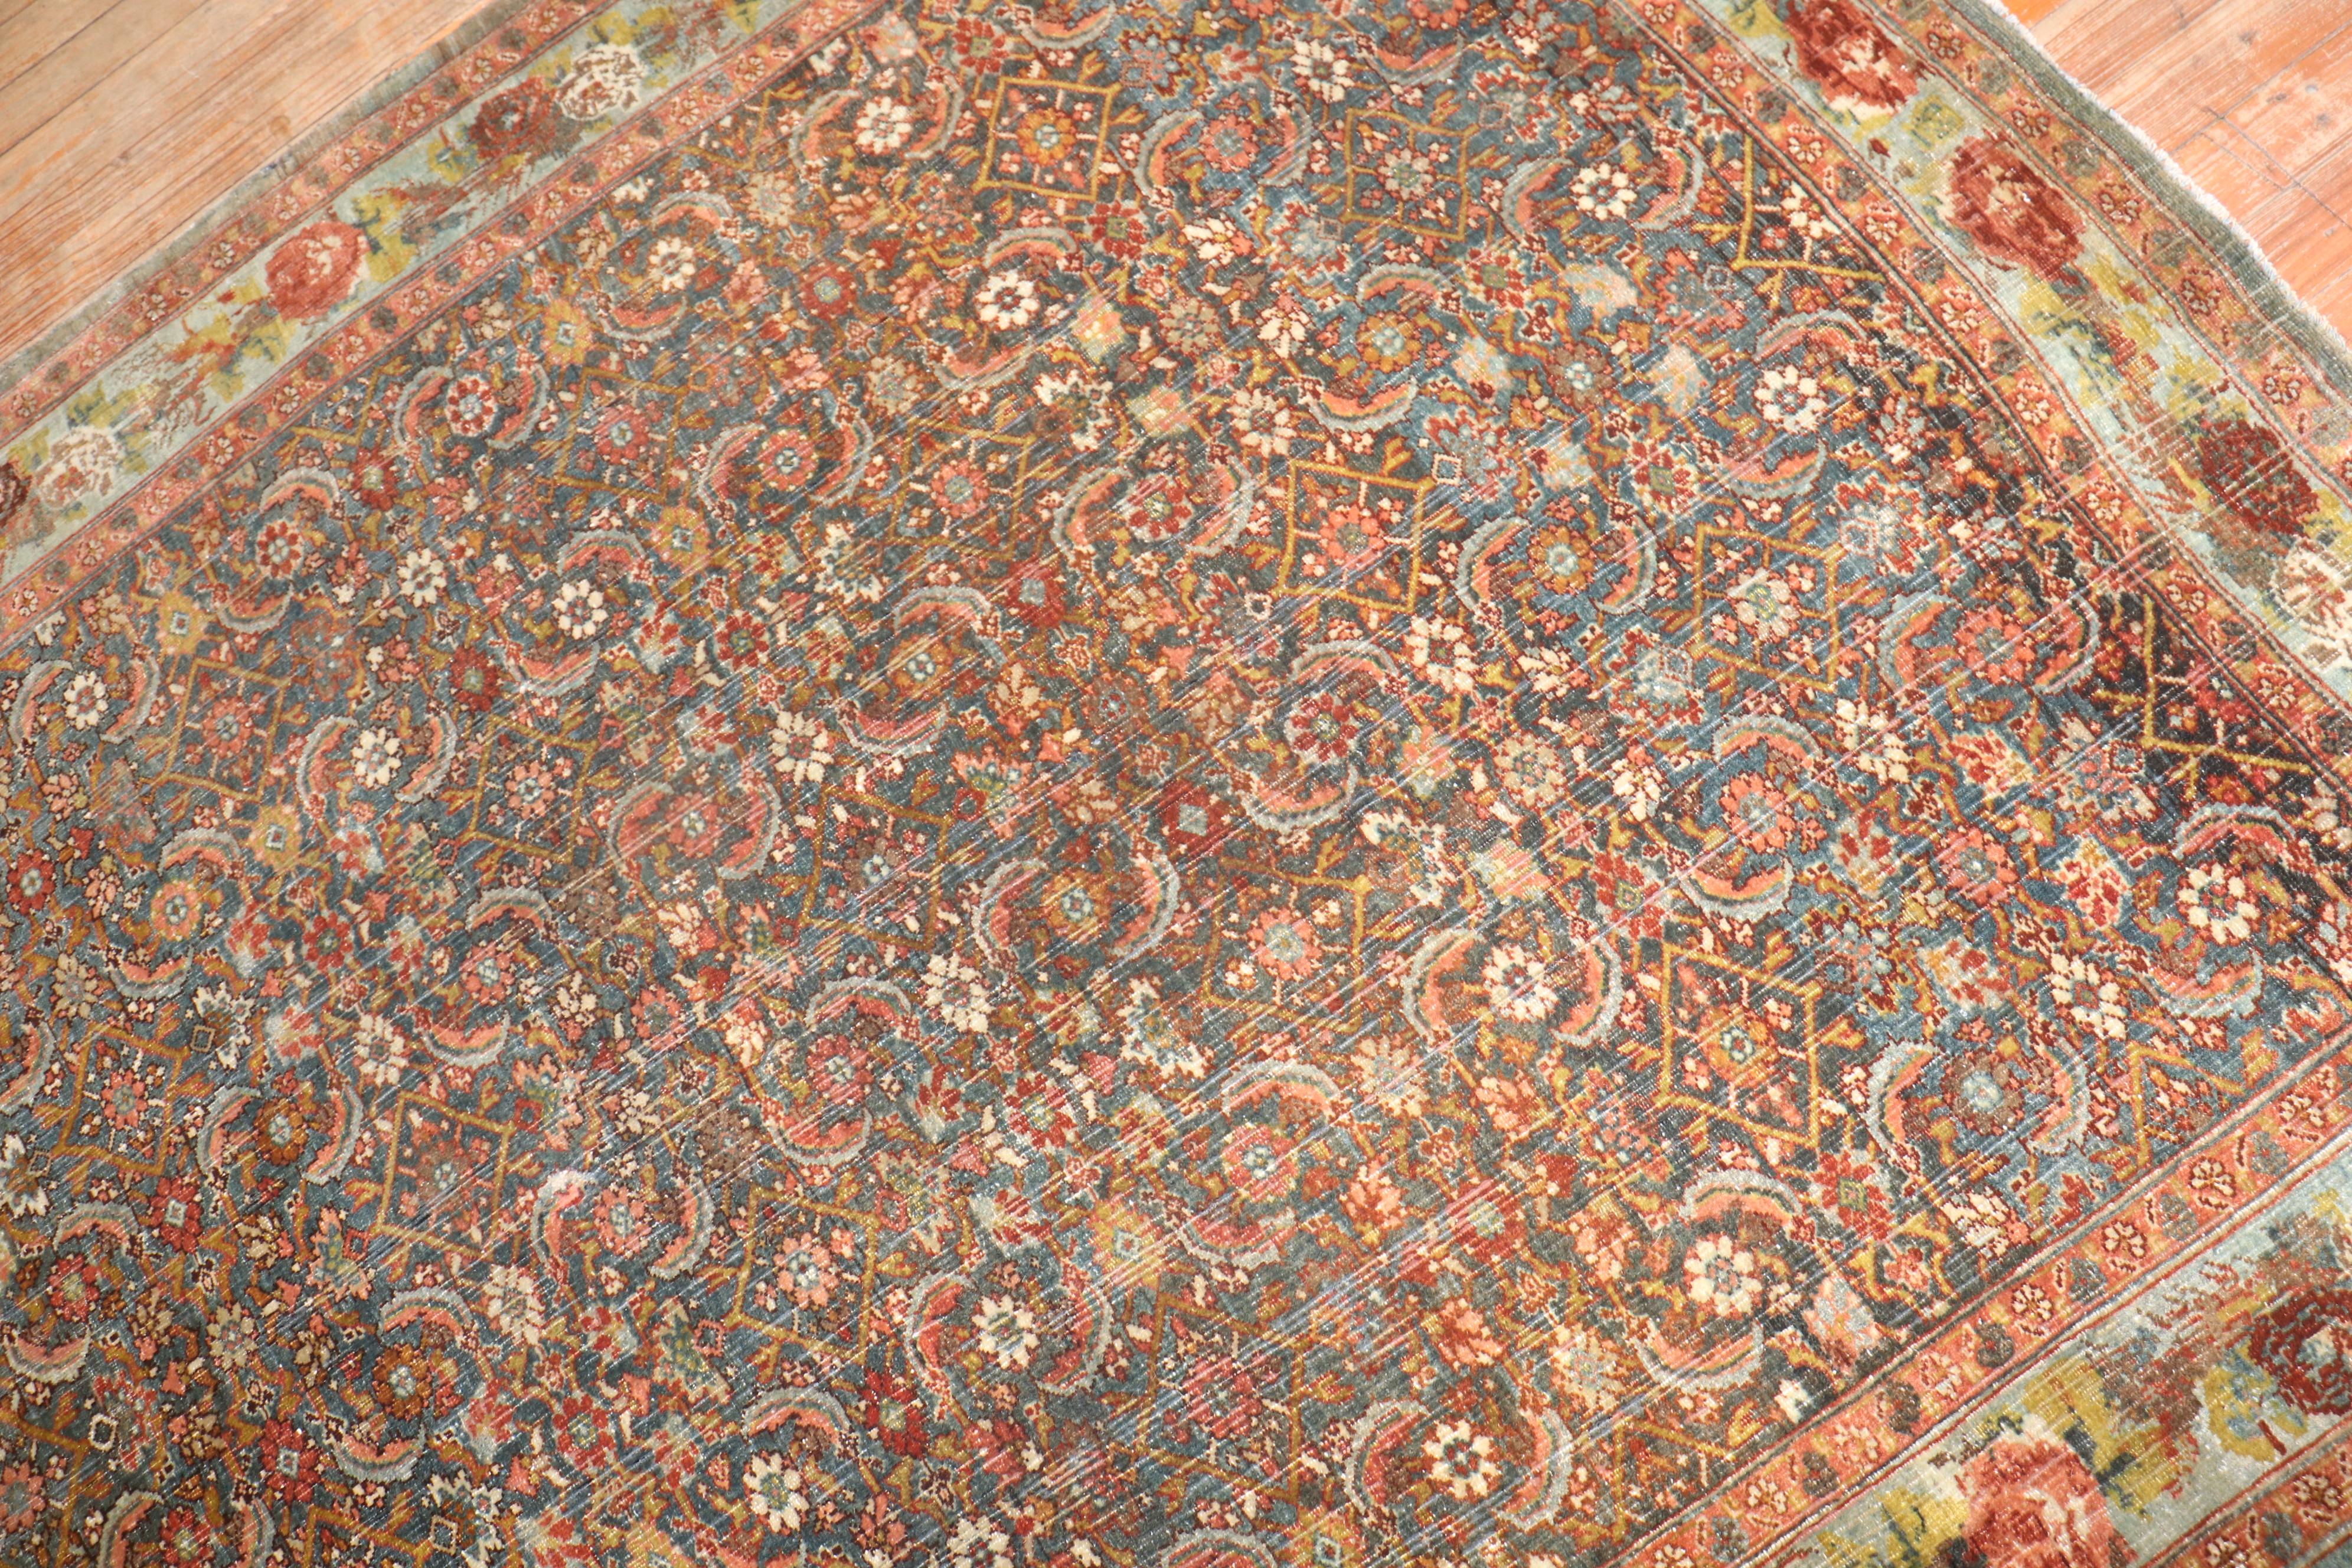 Early 20th century Persian bidjar accent-size rug in moody tones

Measures: 4'10'' x 6'11''.

